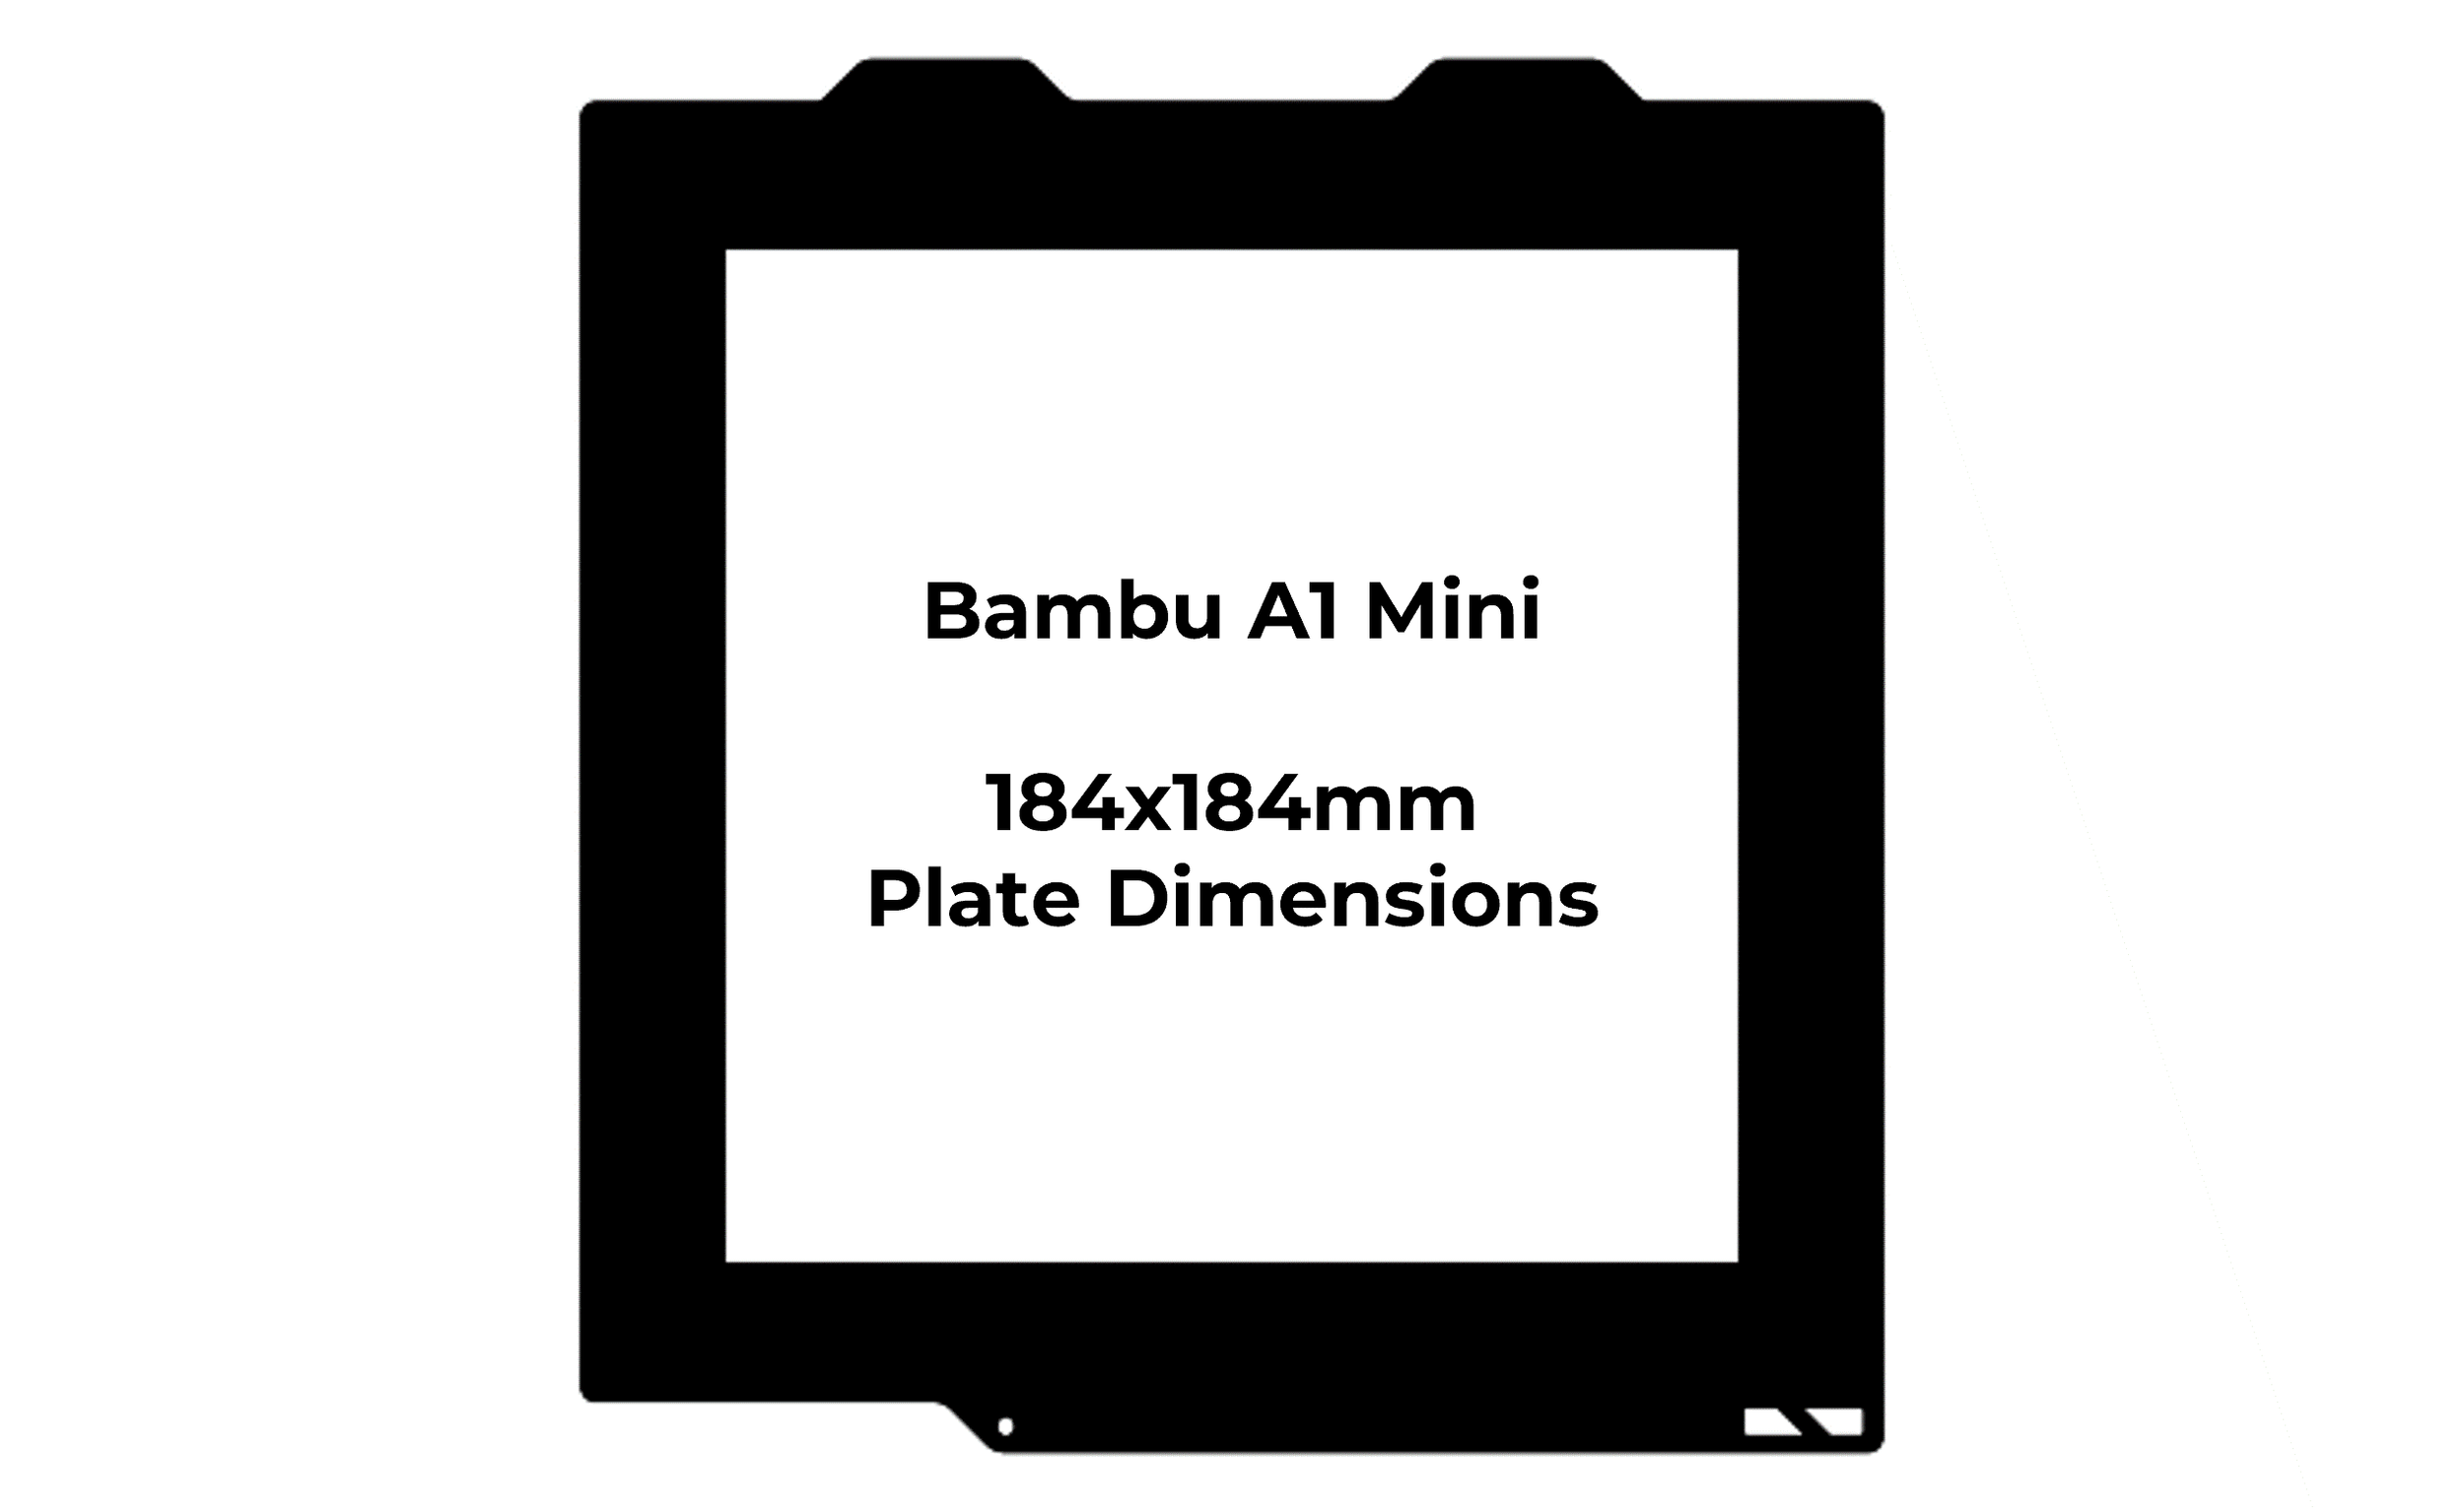 Template_Bambulab A1 Mini.png